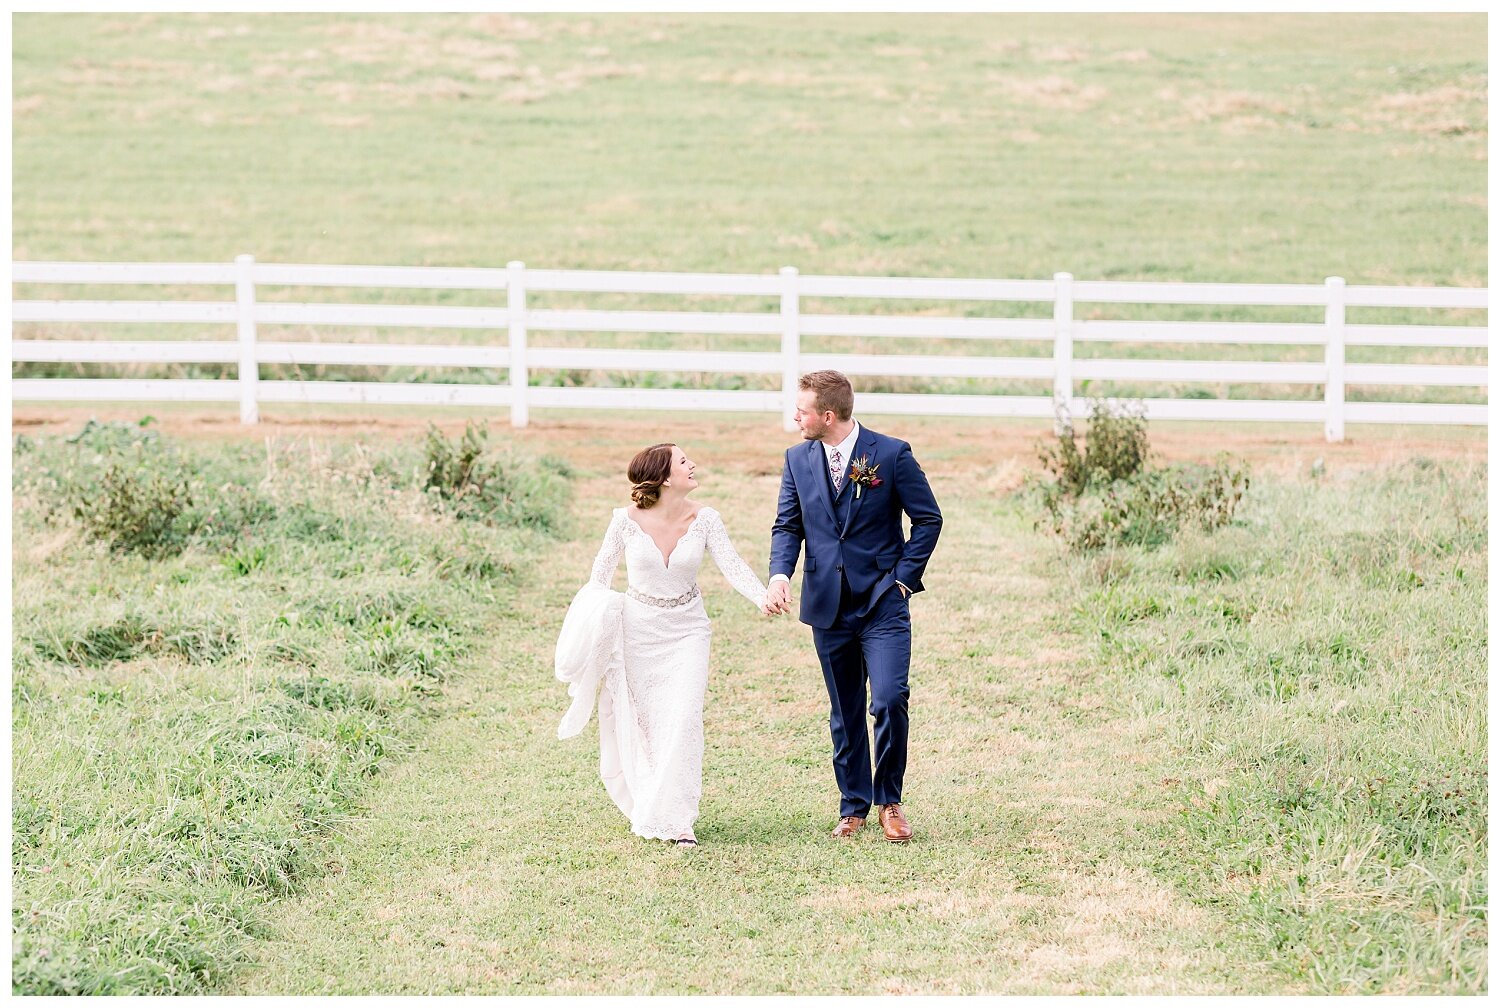 The Fields at Eighteen Ninety wedding photos